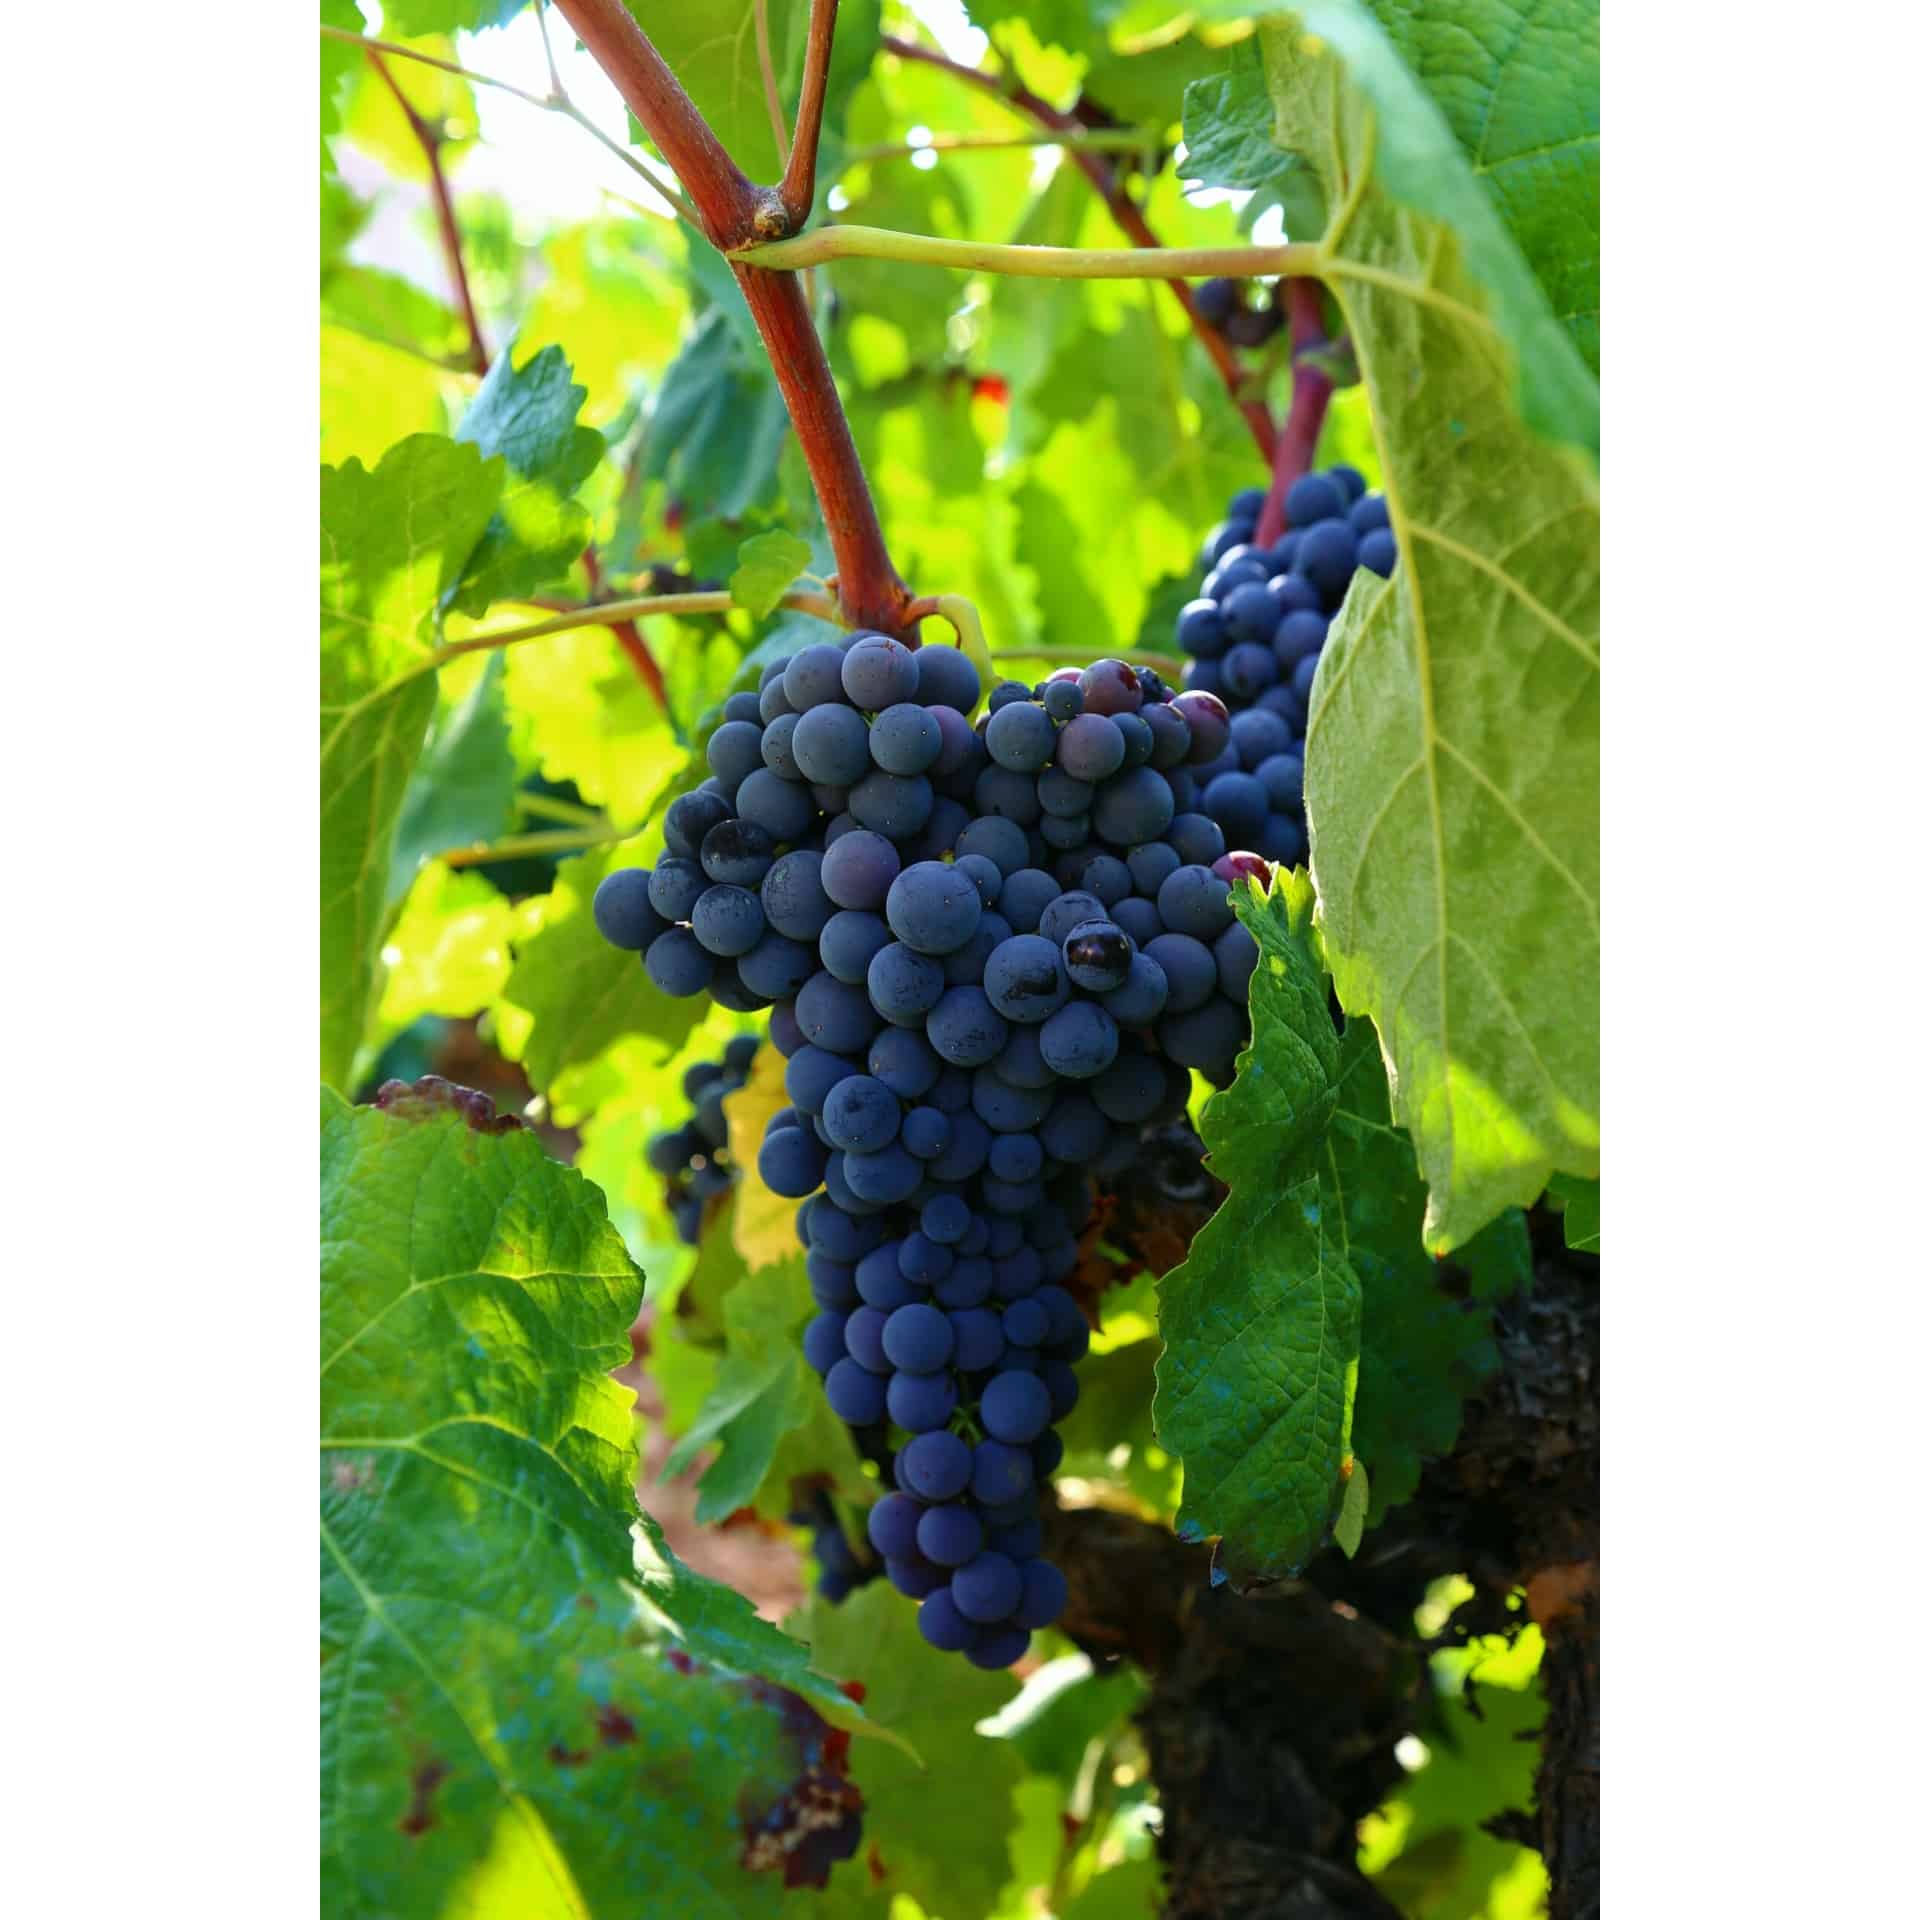 grapes on grape plant